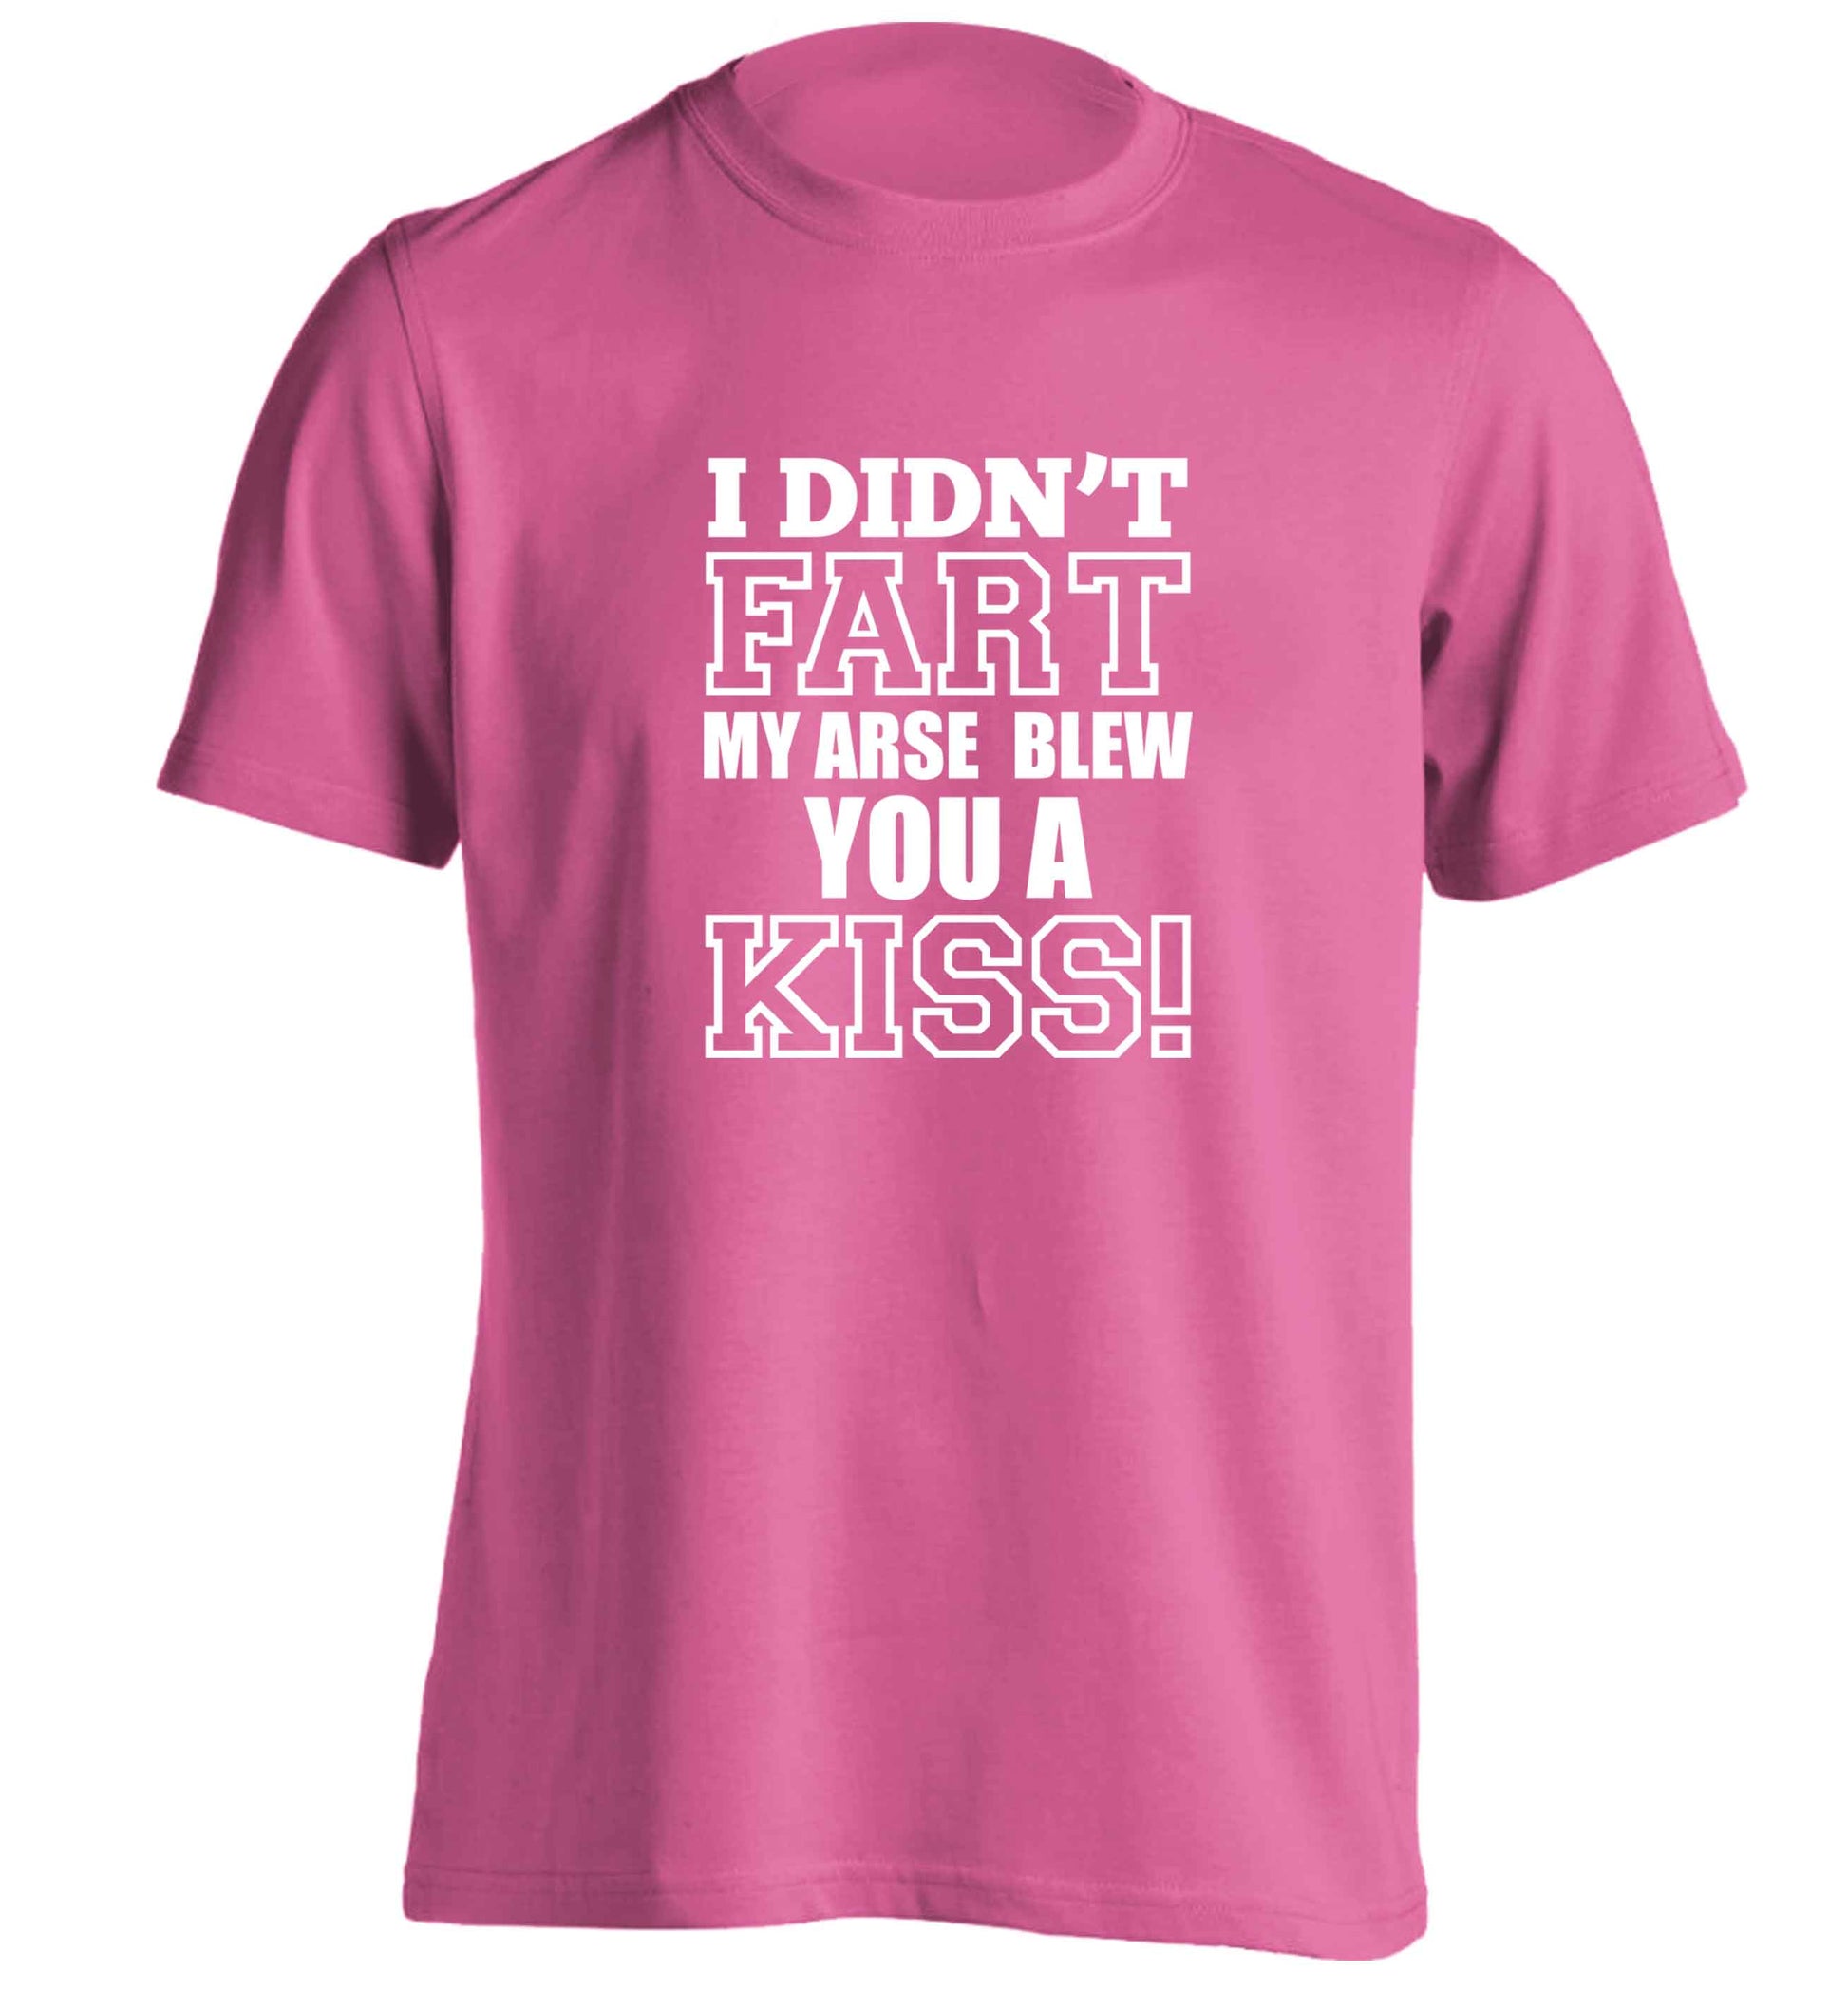 I didn't fart my arse blew you a kiss adults unisex pink Tshirt 2XL